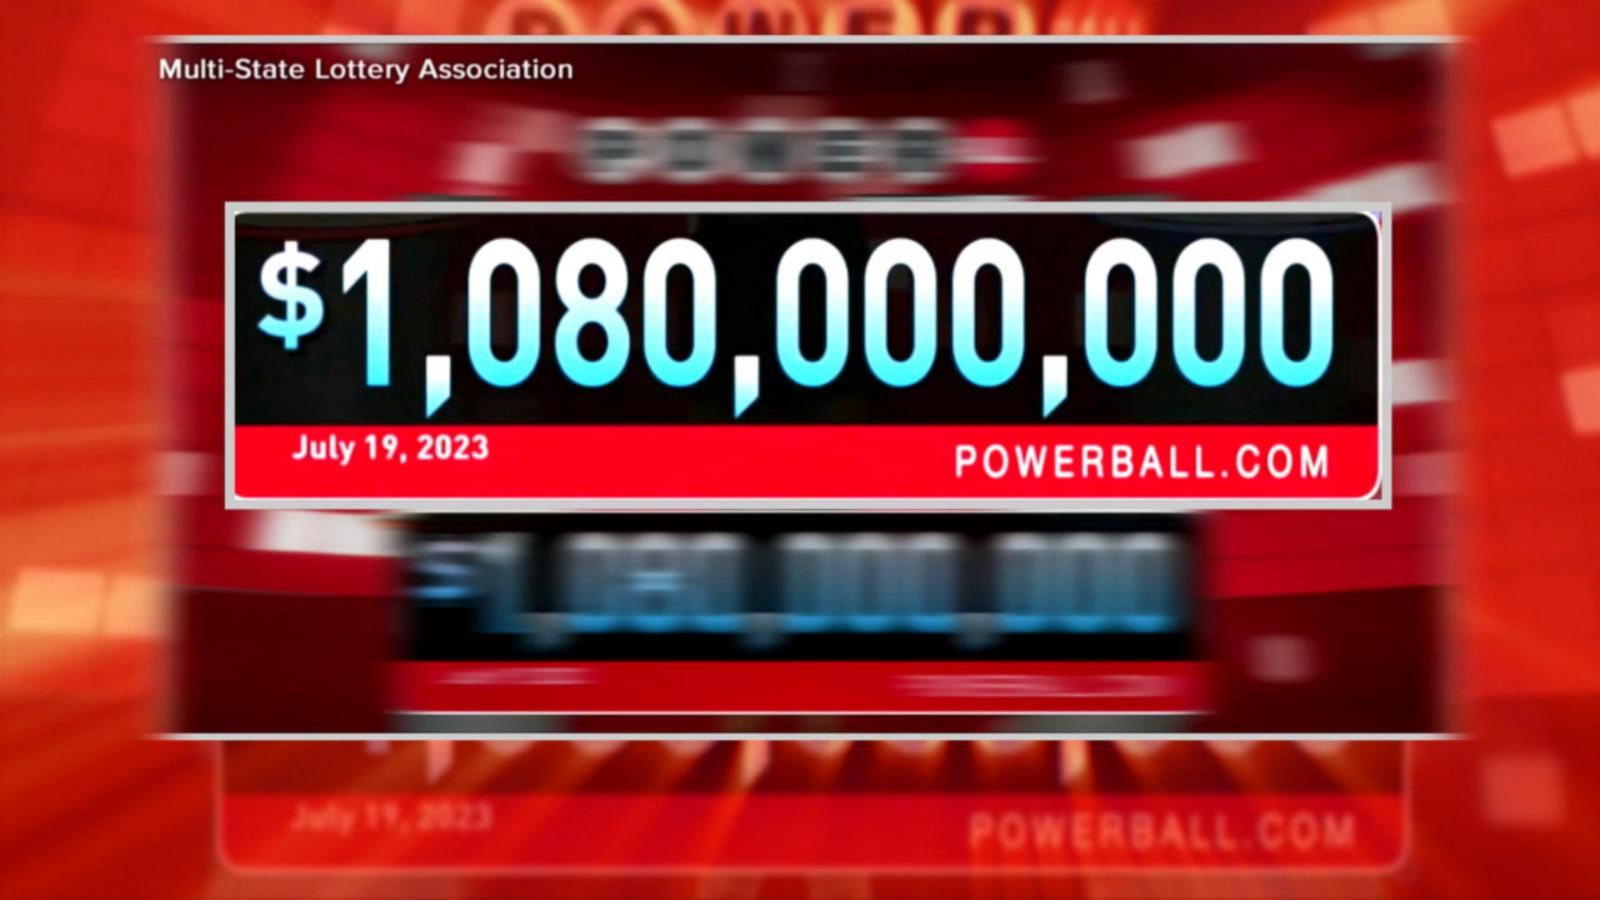 VIDEO: Winning ticket for $1 billion Powerball jackpot sold in California